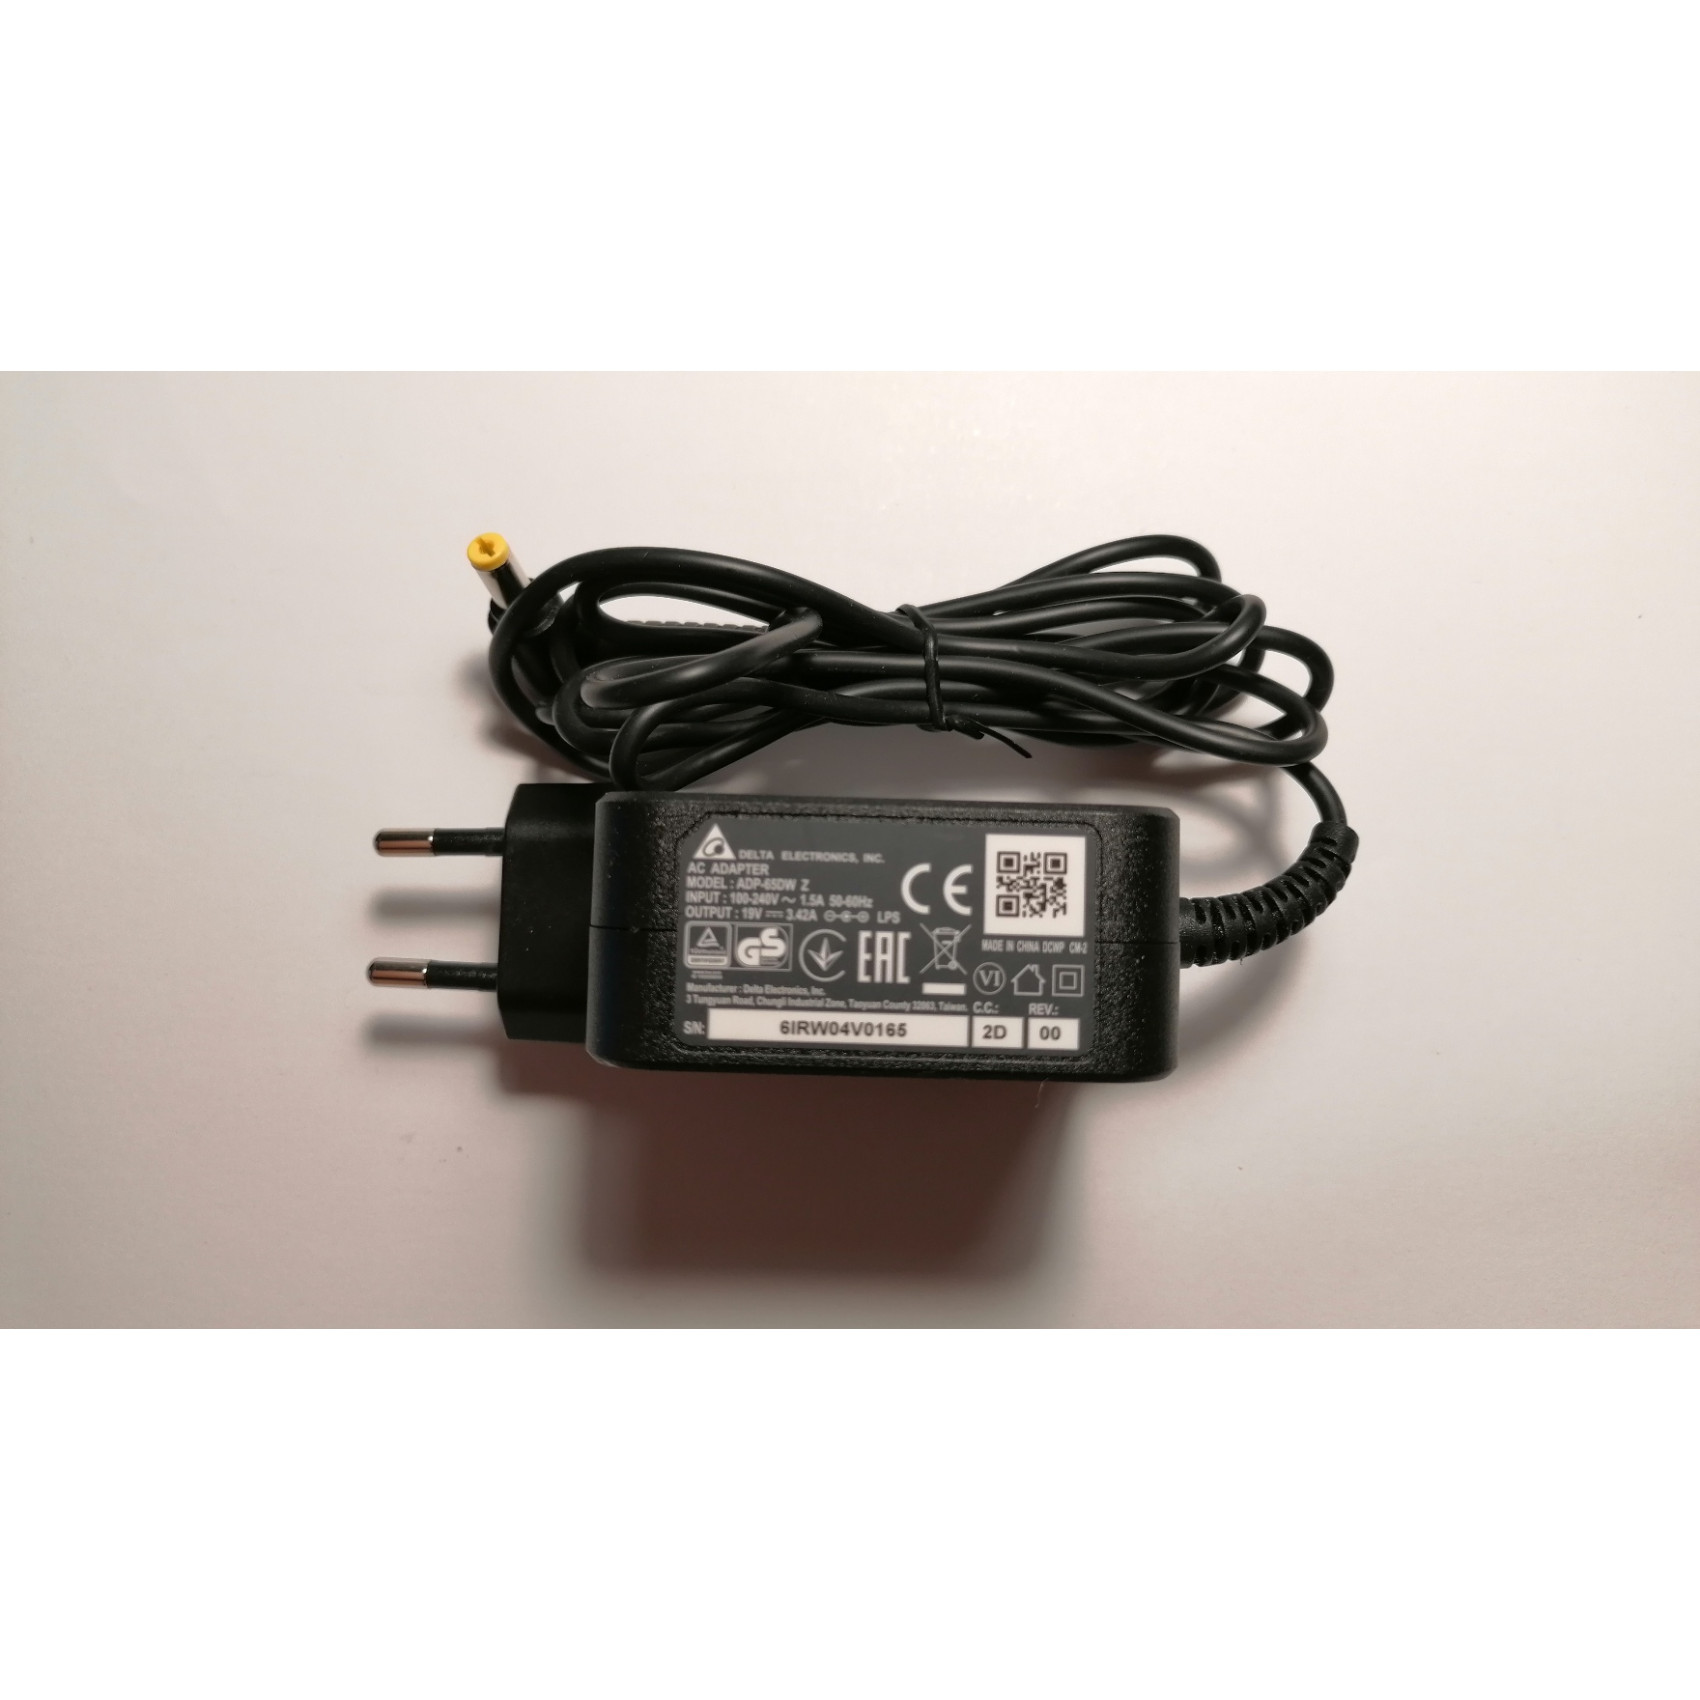 strip Klokje Gewond raken Original Delta Electronics ADP-65DW Z power supply charger power adapter  19V 3.42A | Handeltheke